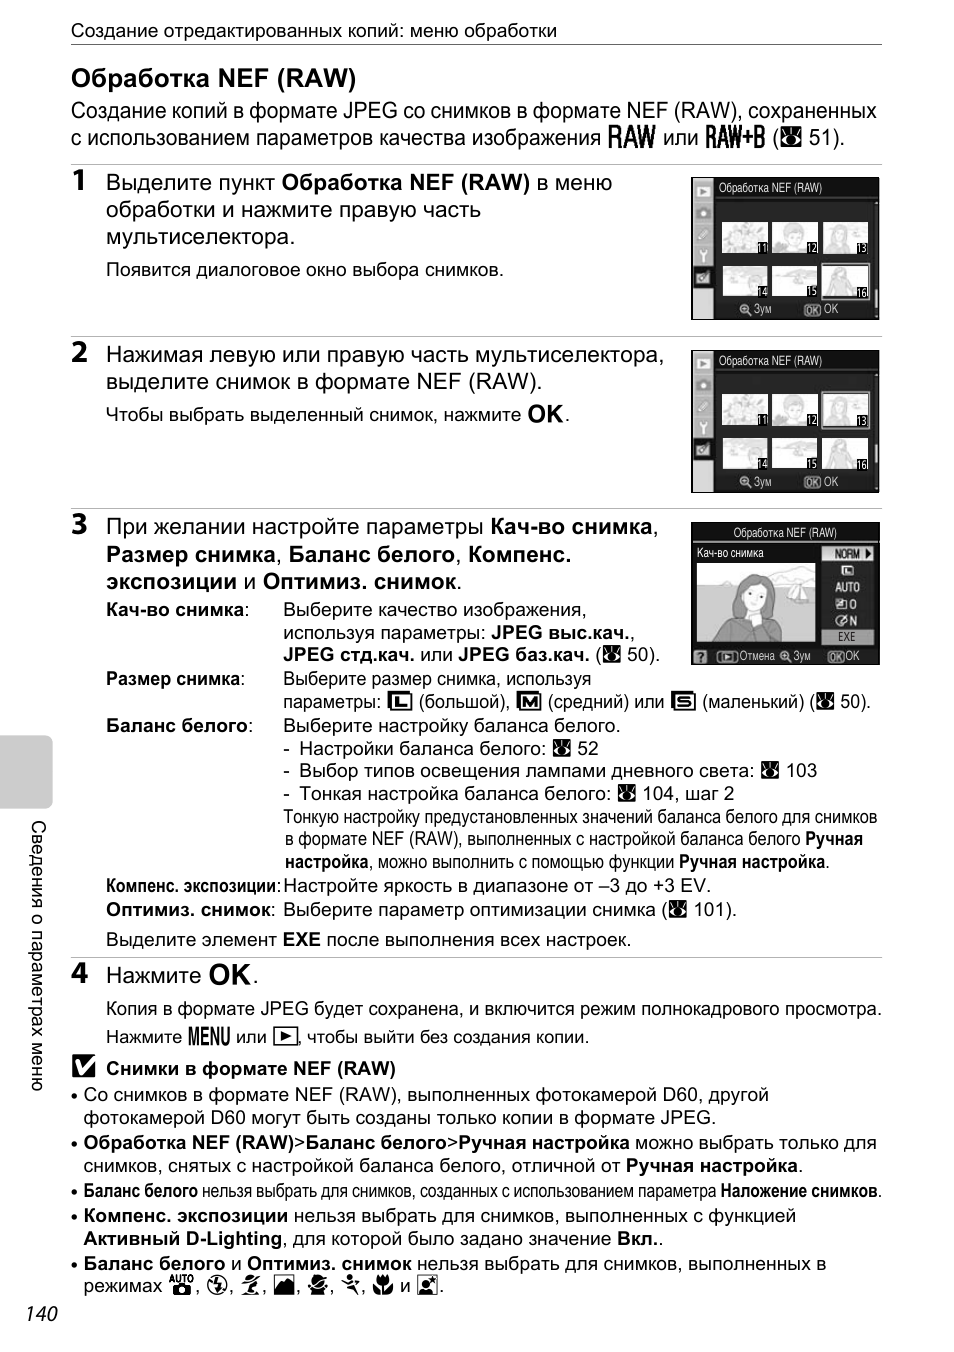 Обработка nef (raw), A 140), Нажмите q | Инструкция по эксплуатации Nikon D60 | Страница 152 / 204